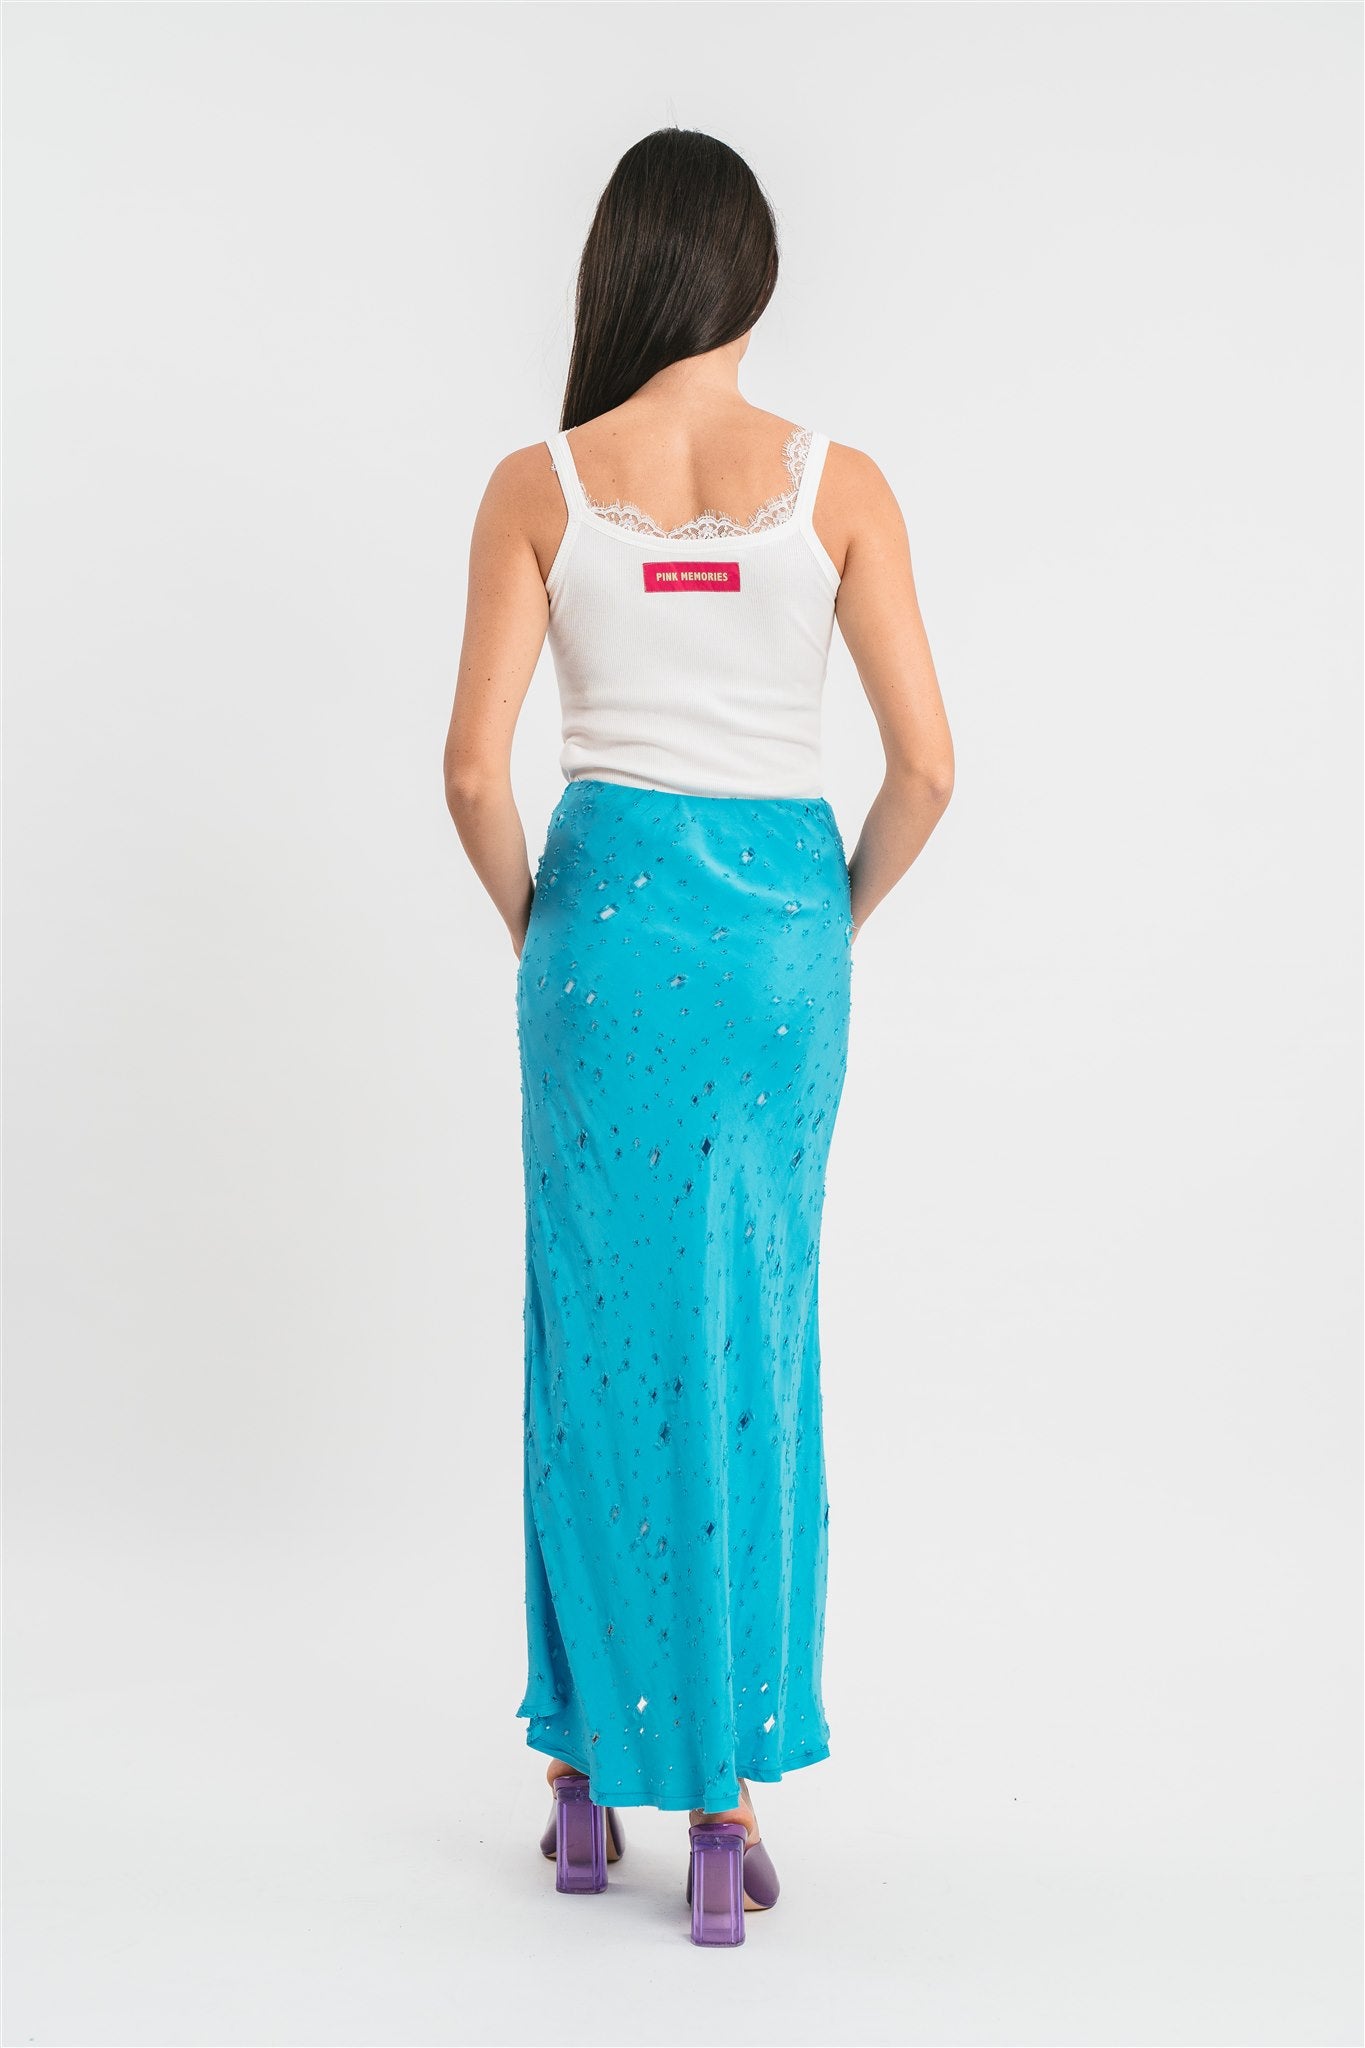 Perforated mermaid skirt